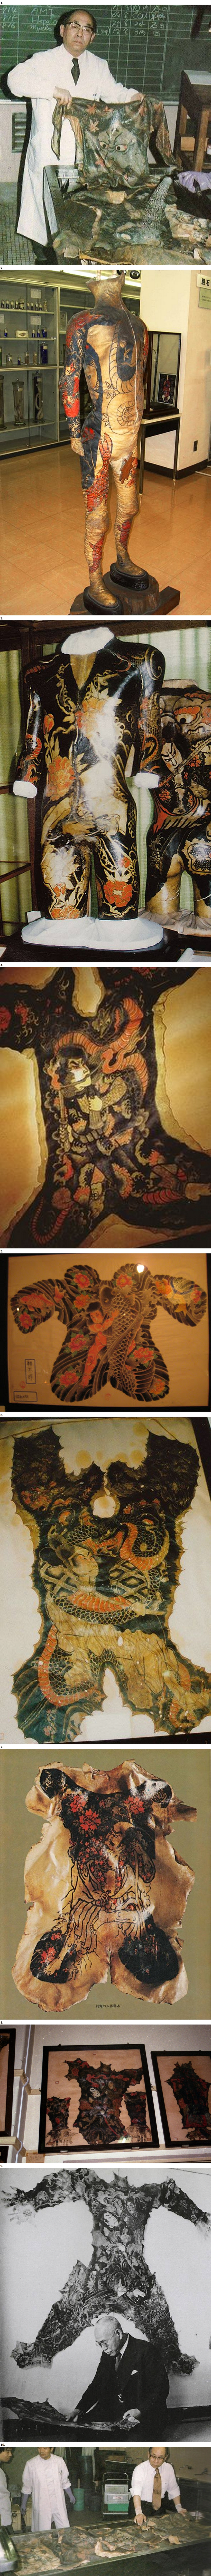 Dr. Masaichi Fukushi - Body Art collection